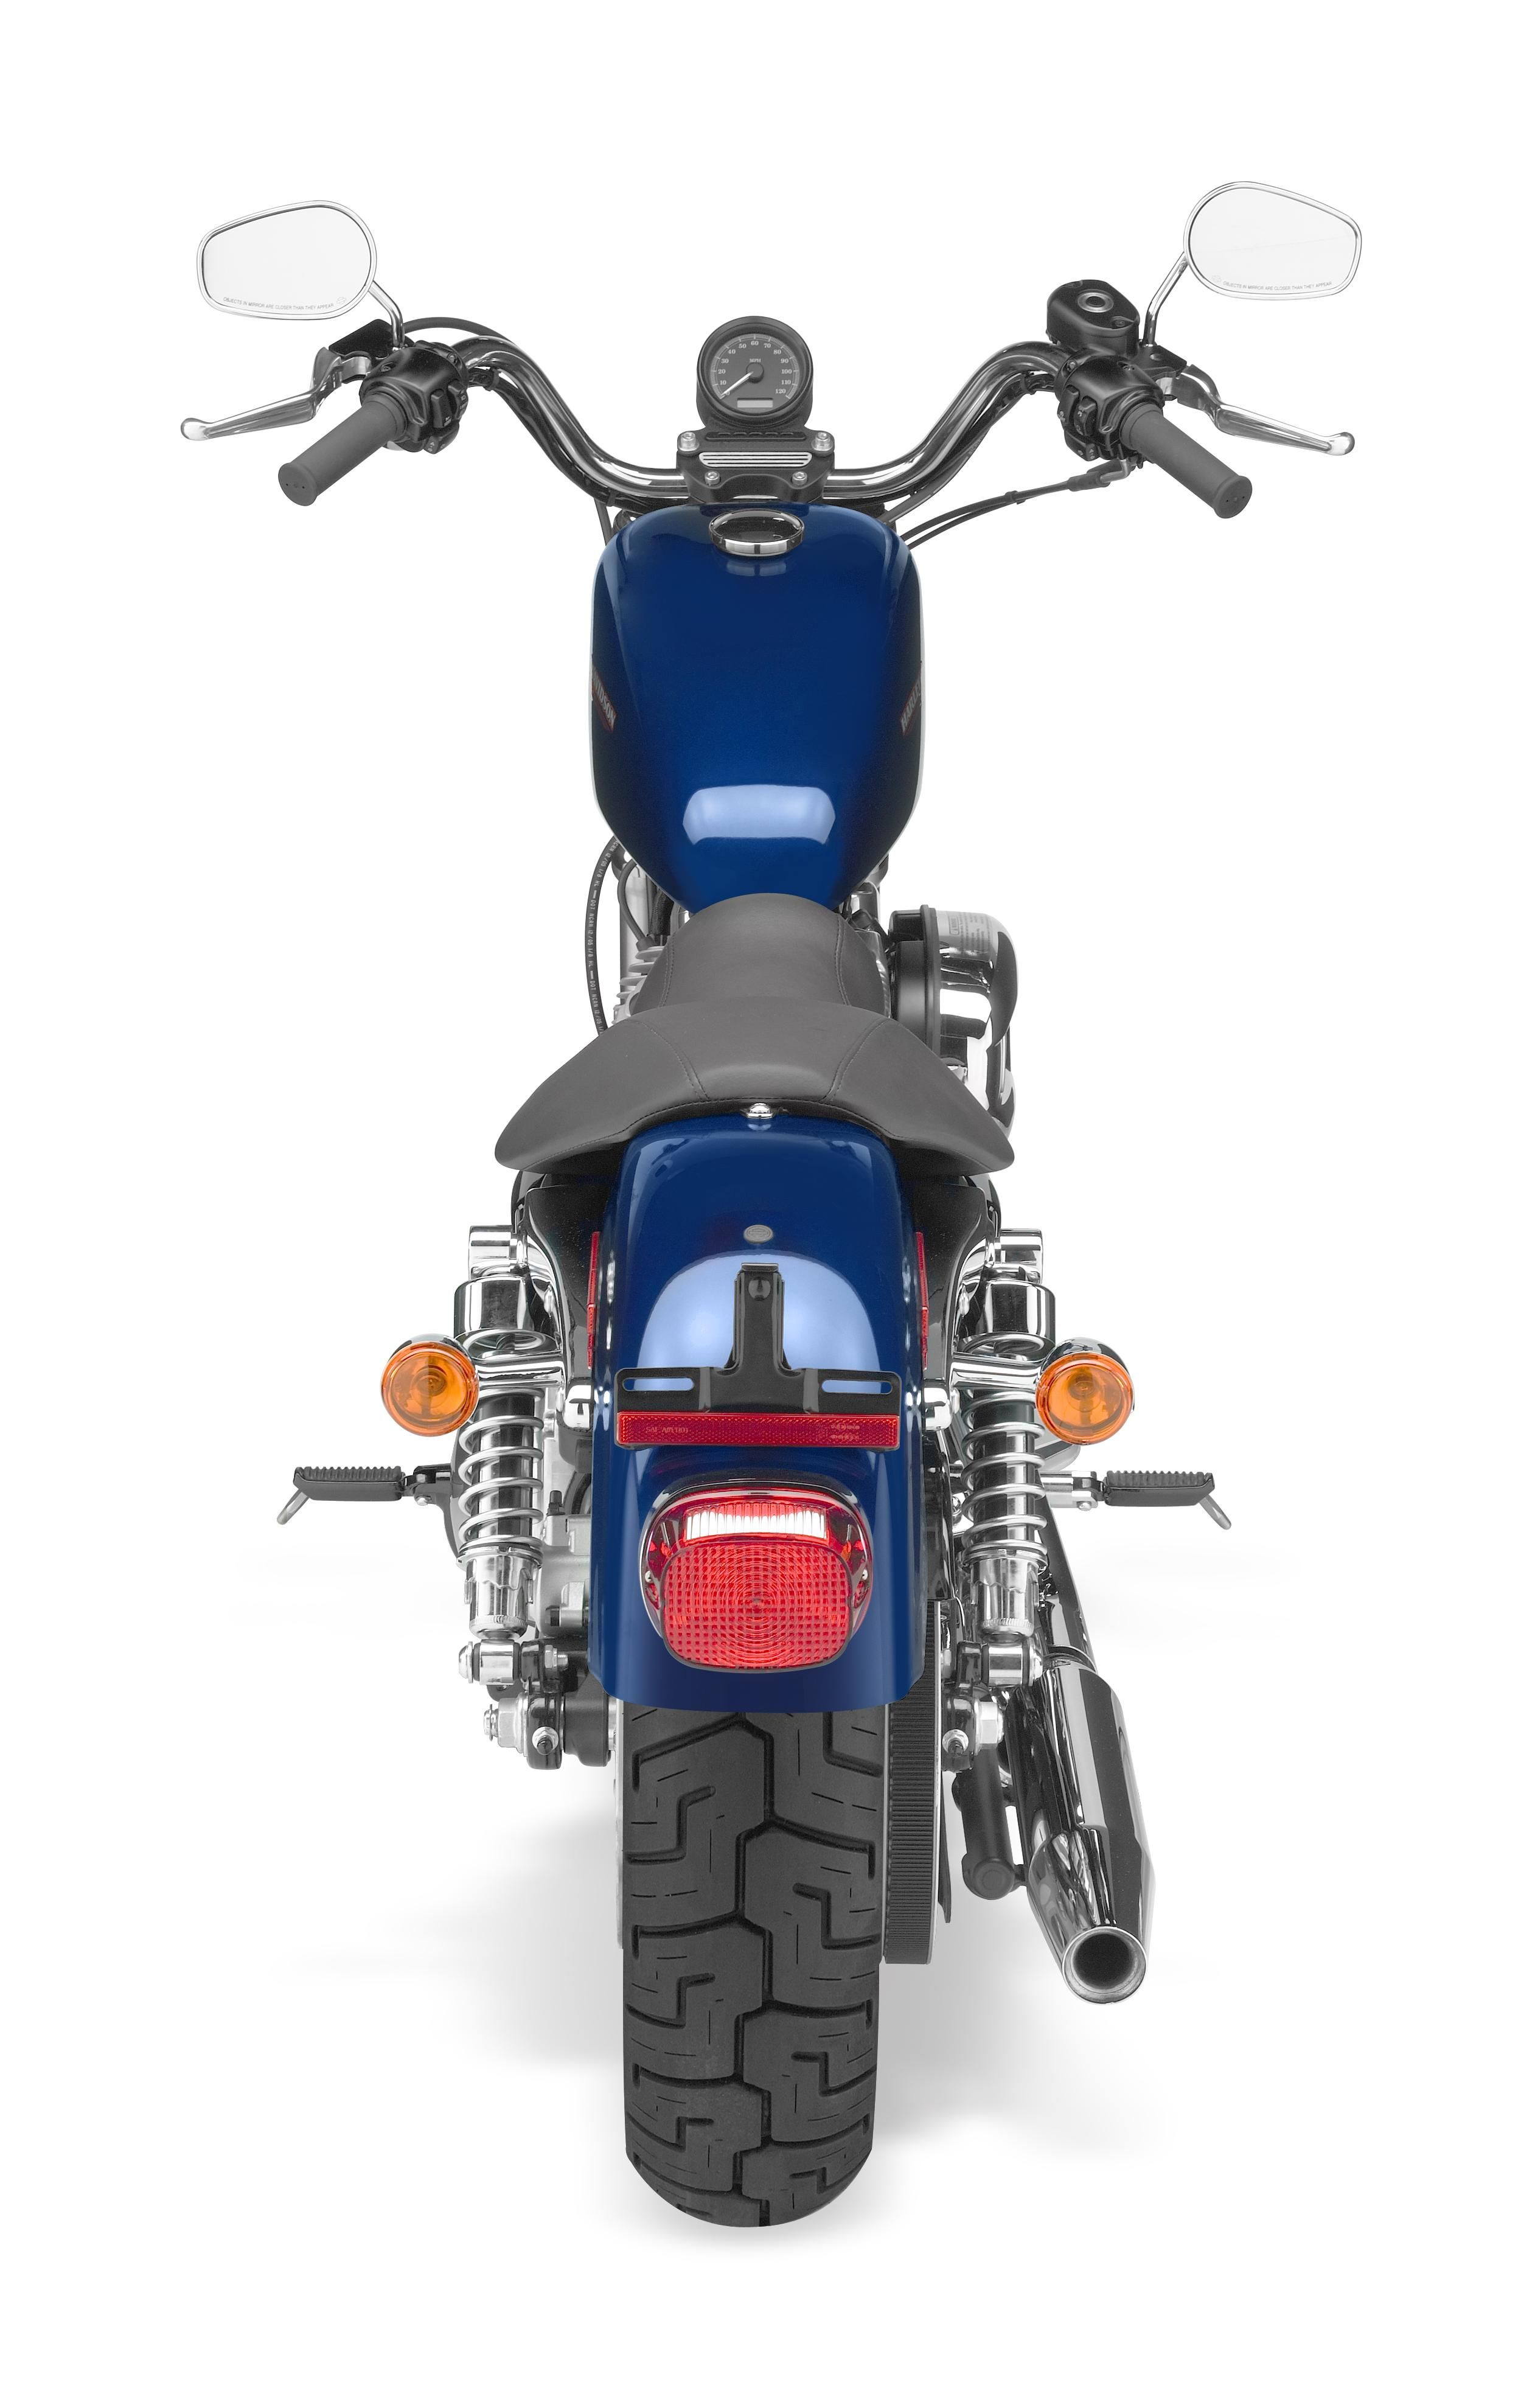 Harley-Davidson XL 883 Sportster 883 Low